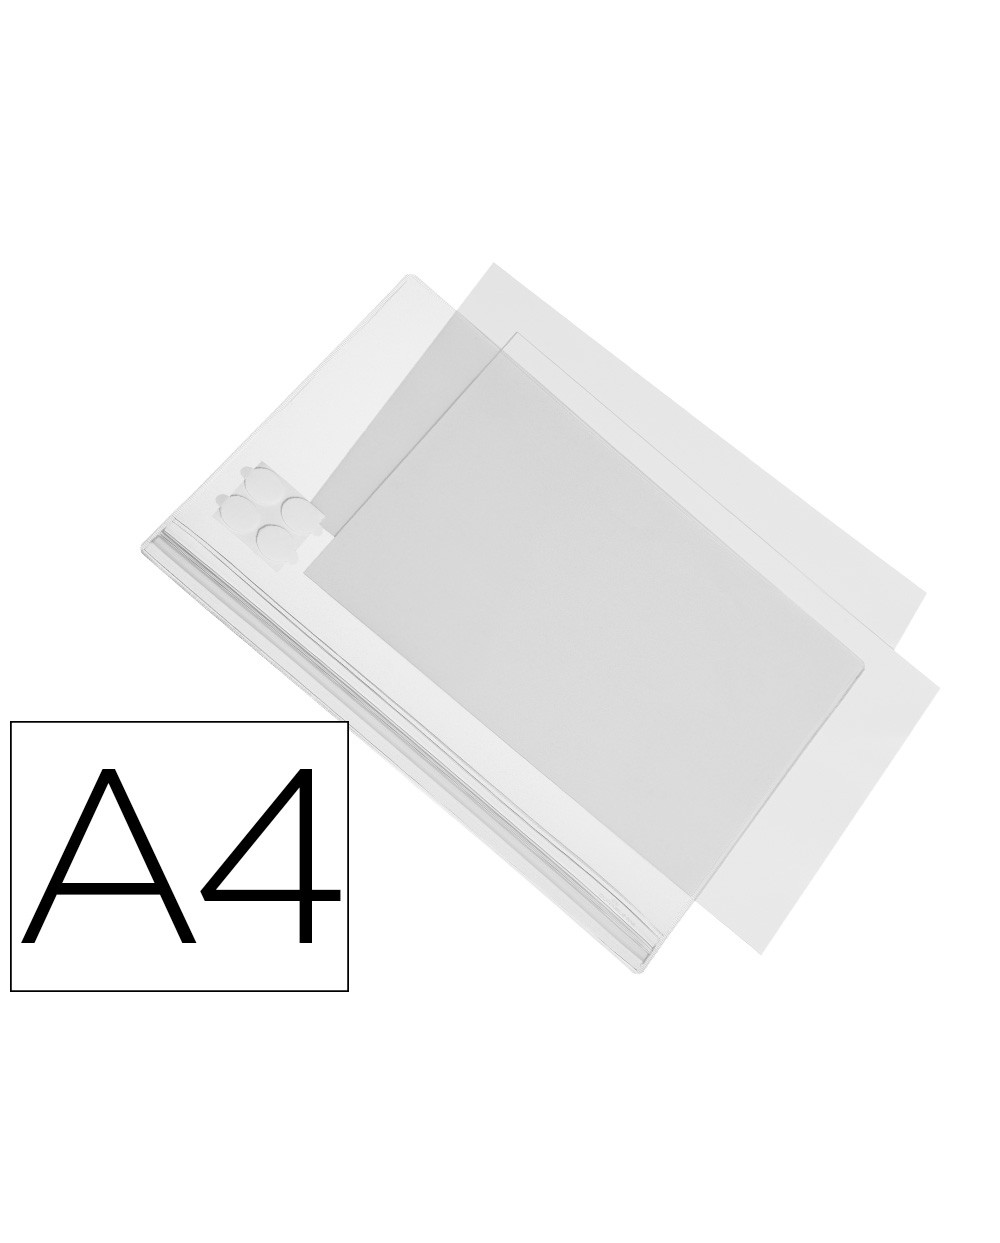 Marco porta anuncios durable adhesiva impermeable transparente din a4 pack de 5 unidades